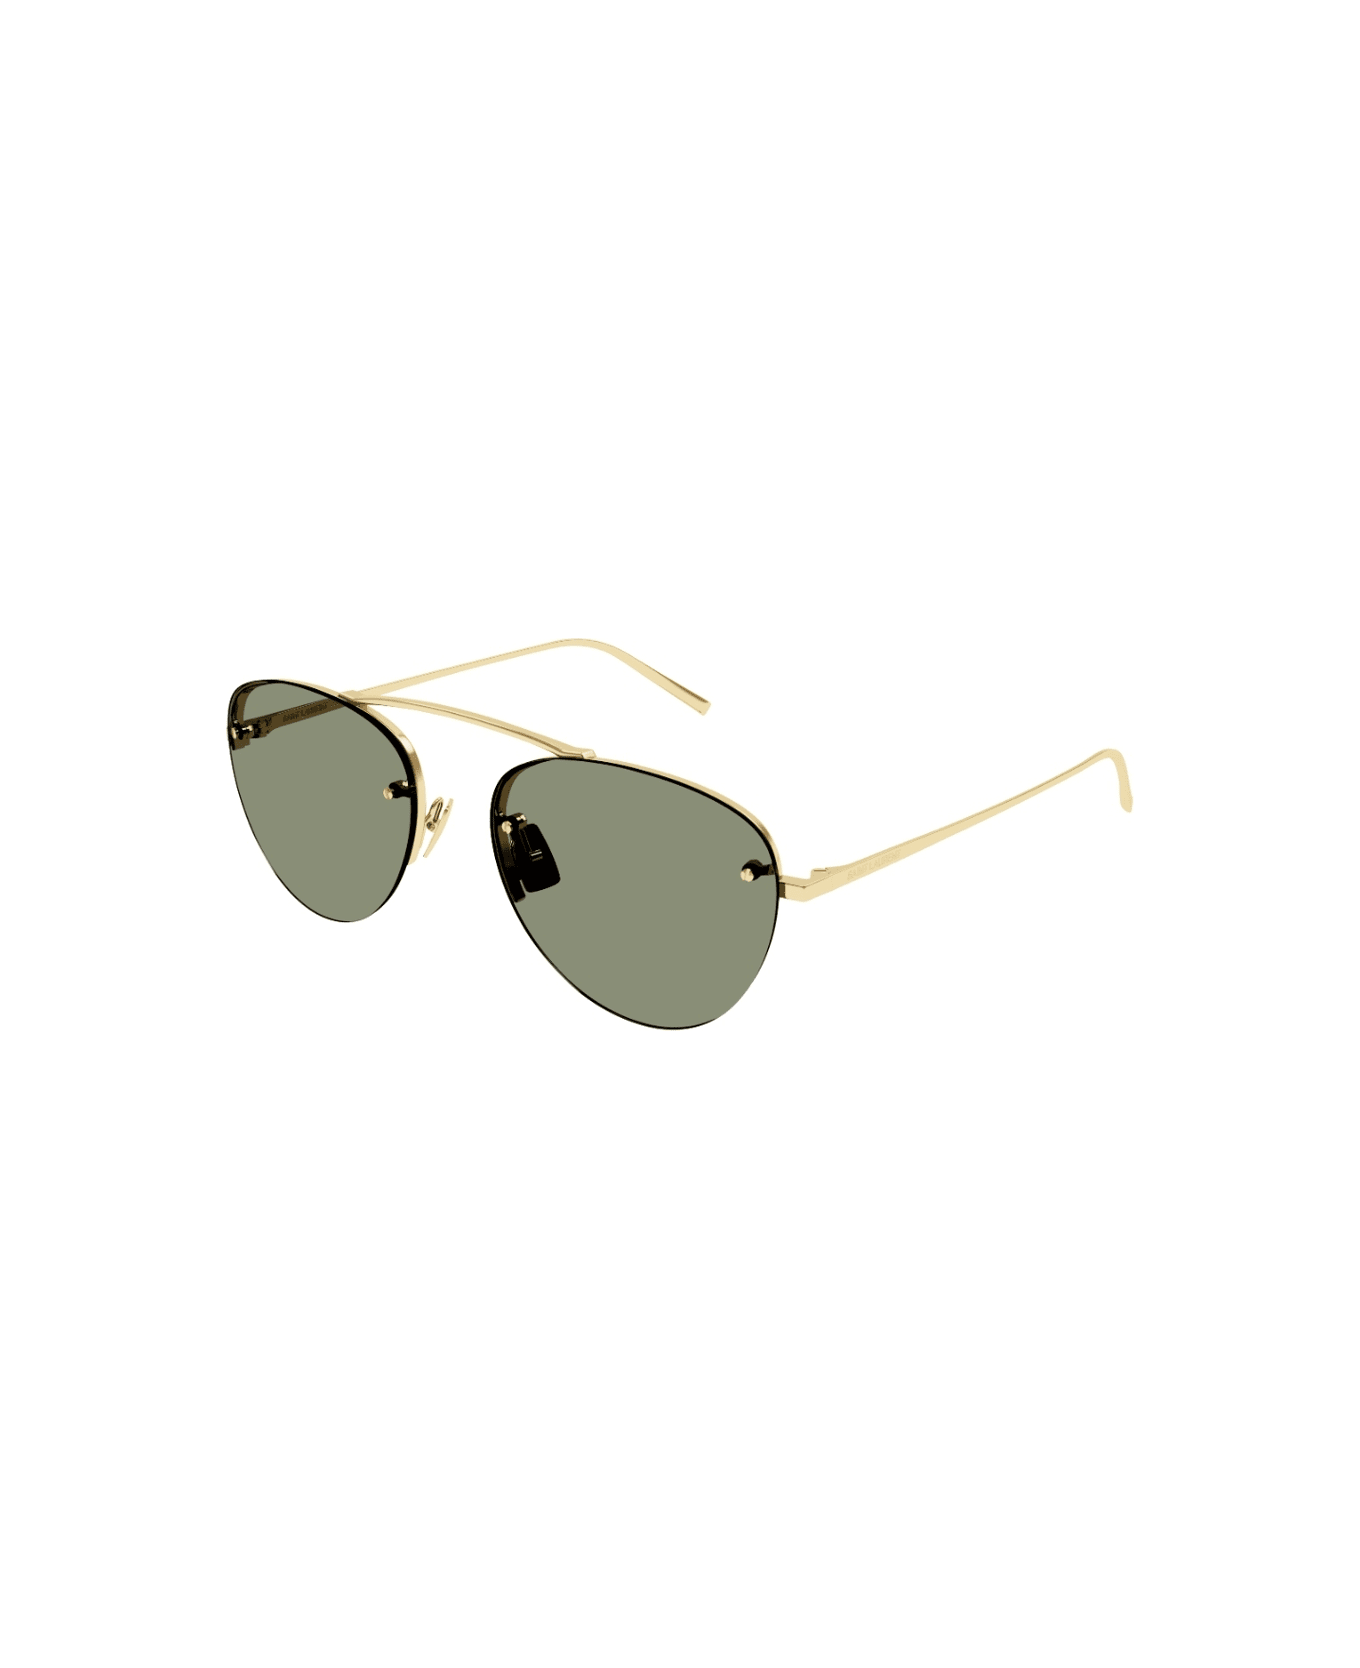 Saint Laurent Eyewear sl 575 003 Sunglasses サングラス